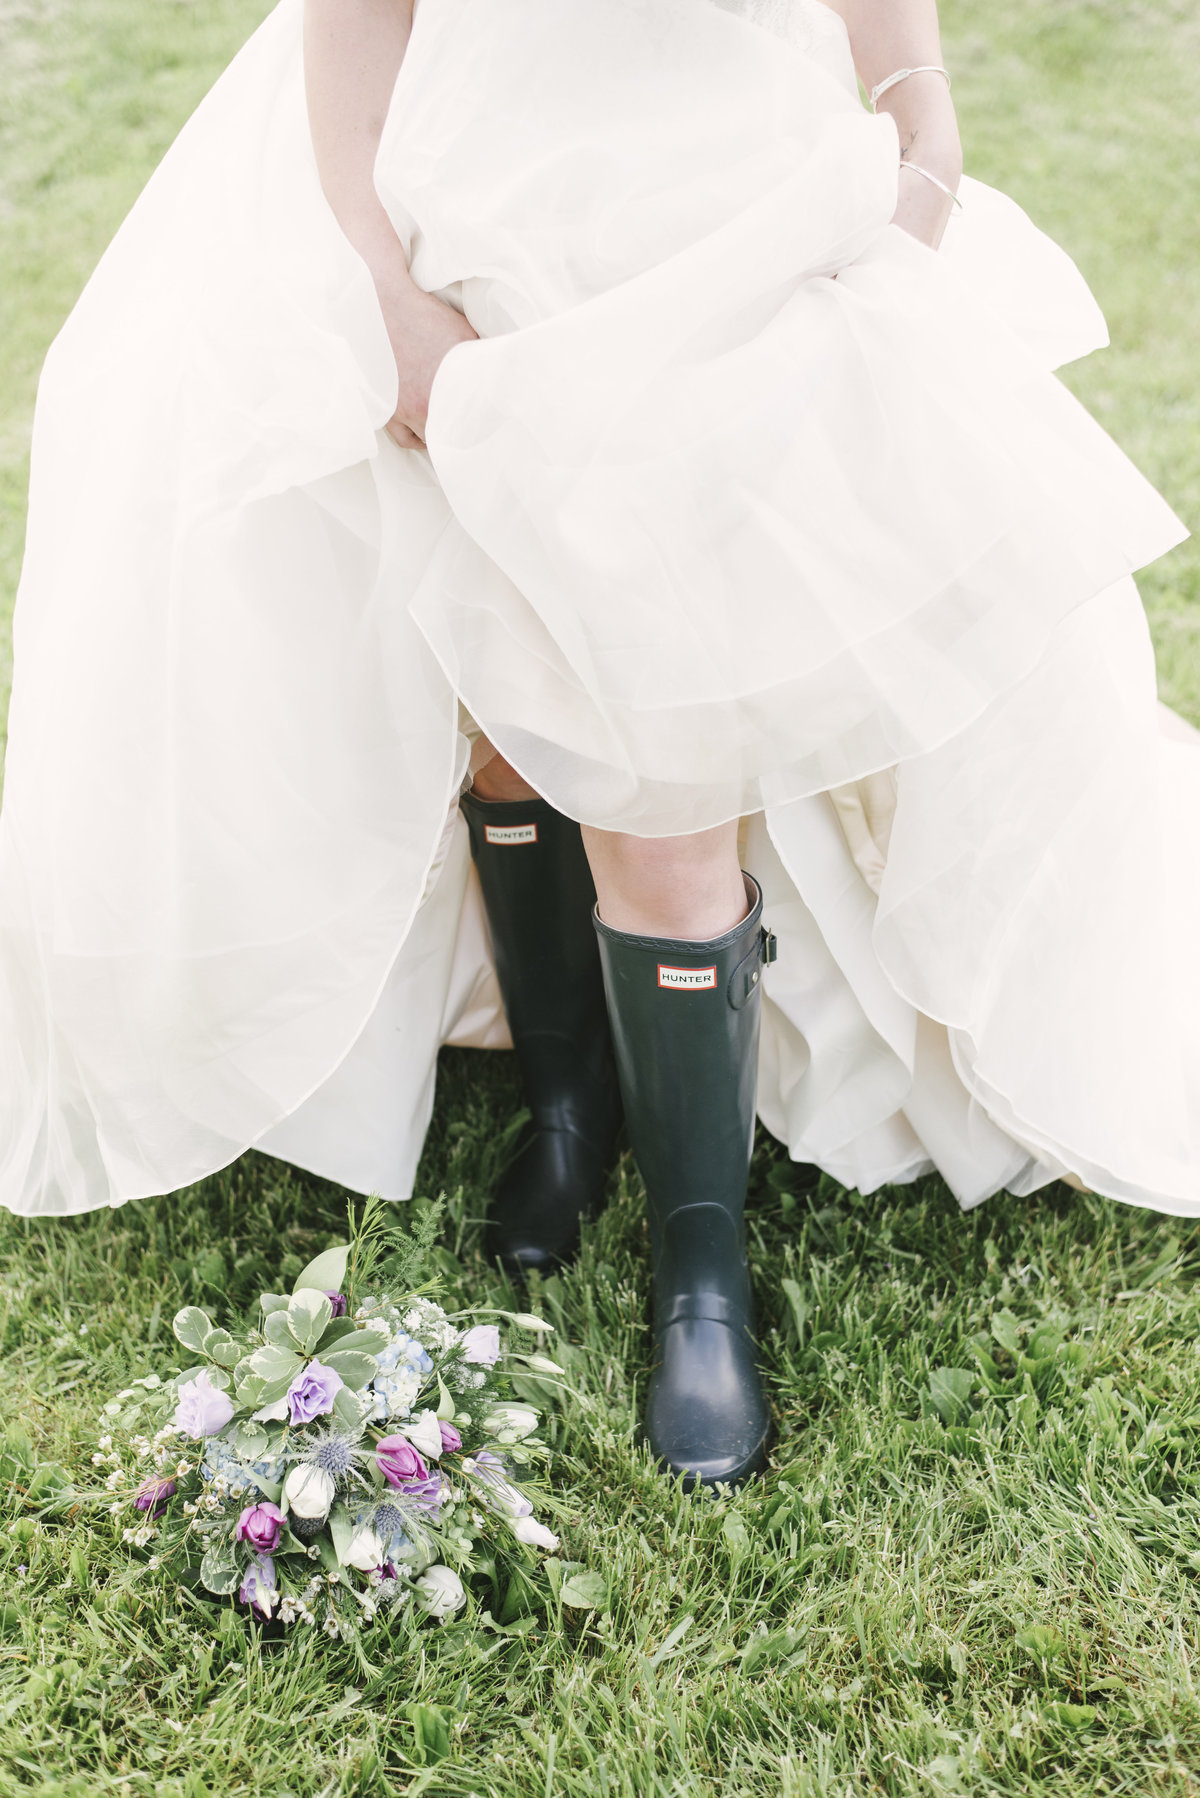 Monica-Relyea-Events-Alicia-King-Photography-Globe-Hill-Ronnybrook-Farm-Hudson-Valley-wedding-shoot-inspiration20